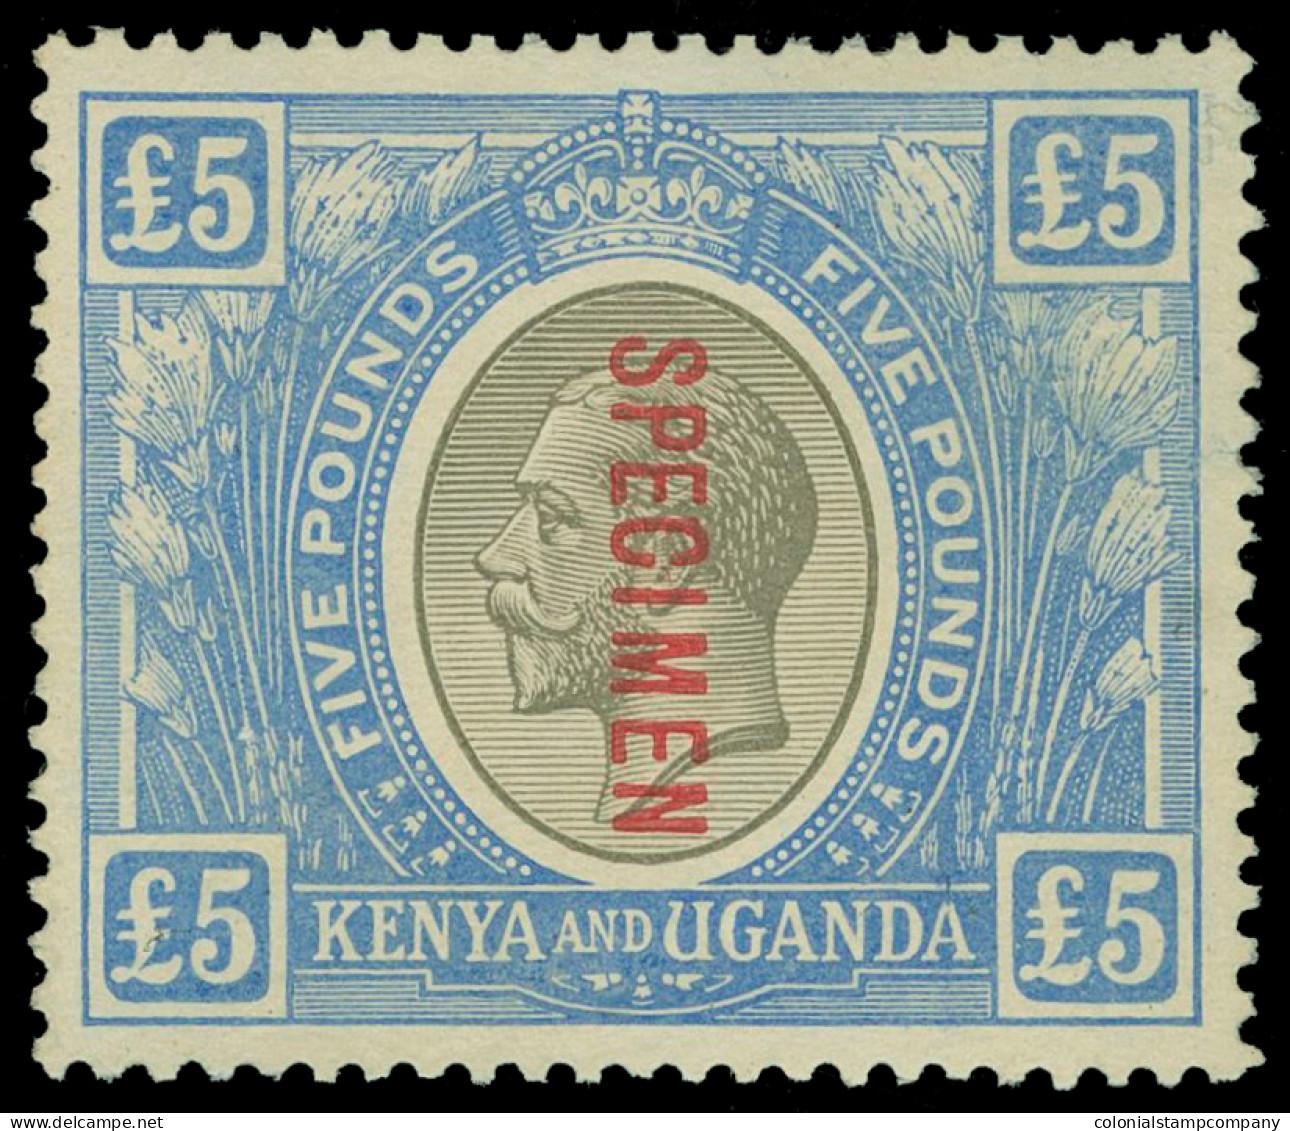 S Kenya, Uganda And Tanganyika - Lot No. 829 - Herrschaften Von Ostafrika Und Uganda